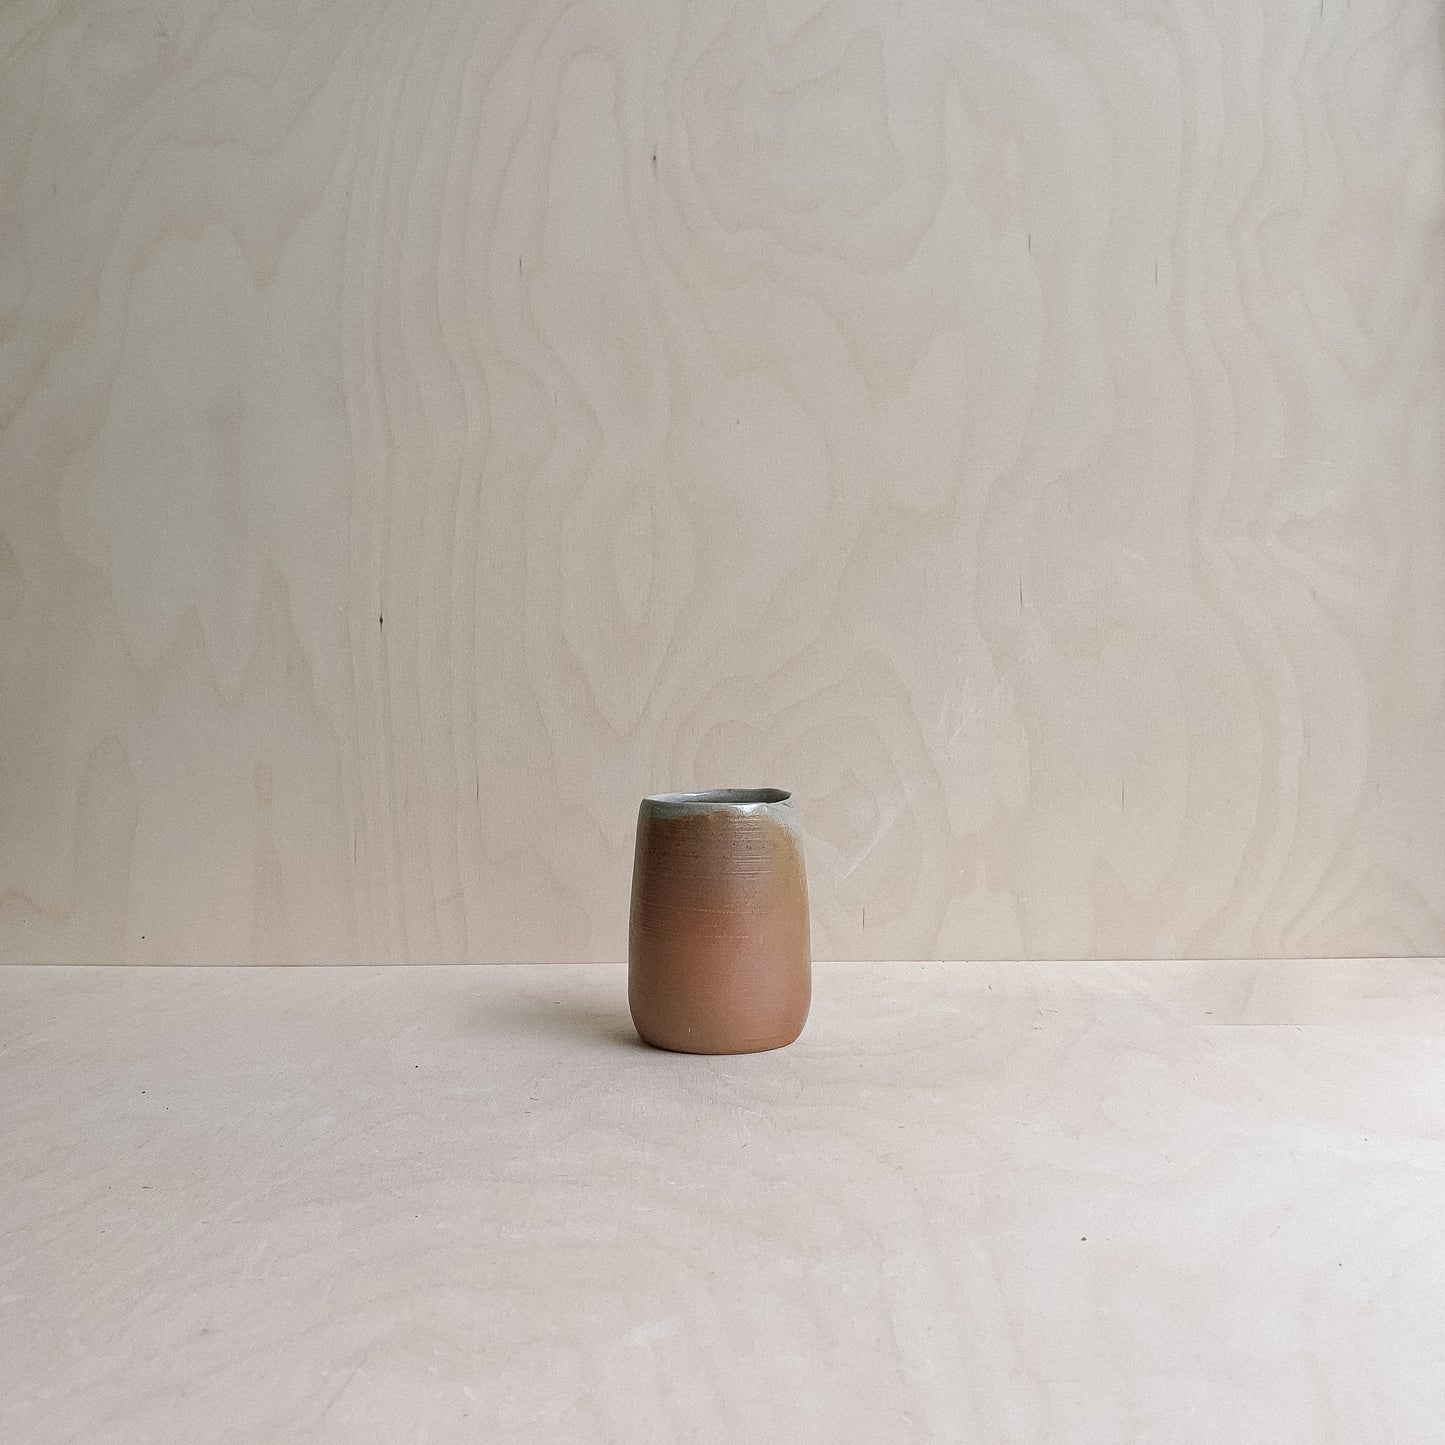 Mini vase, wood fired